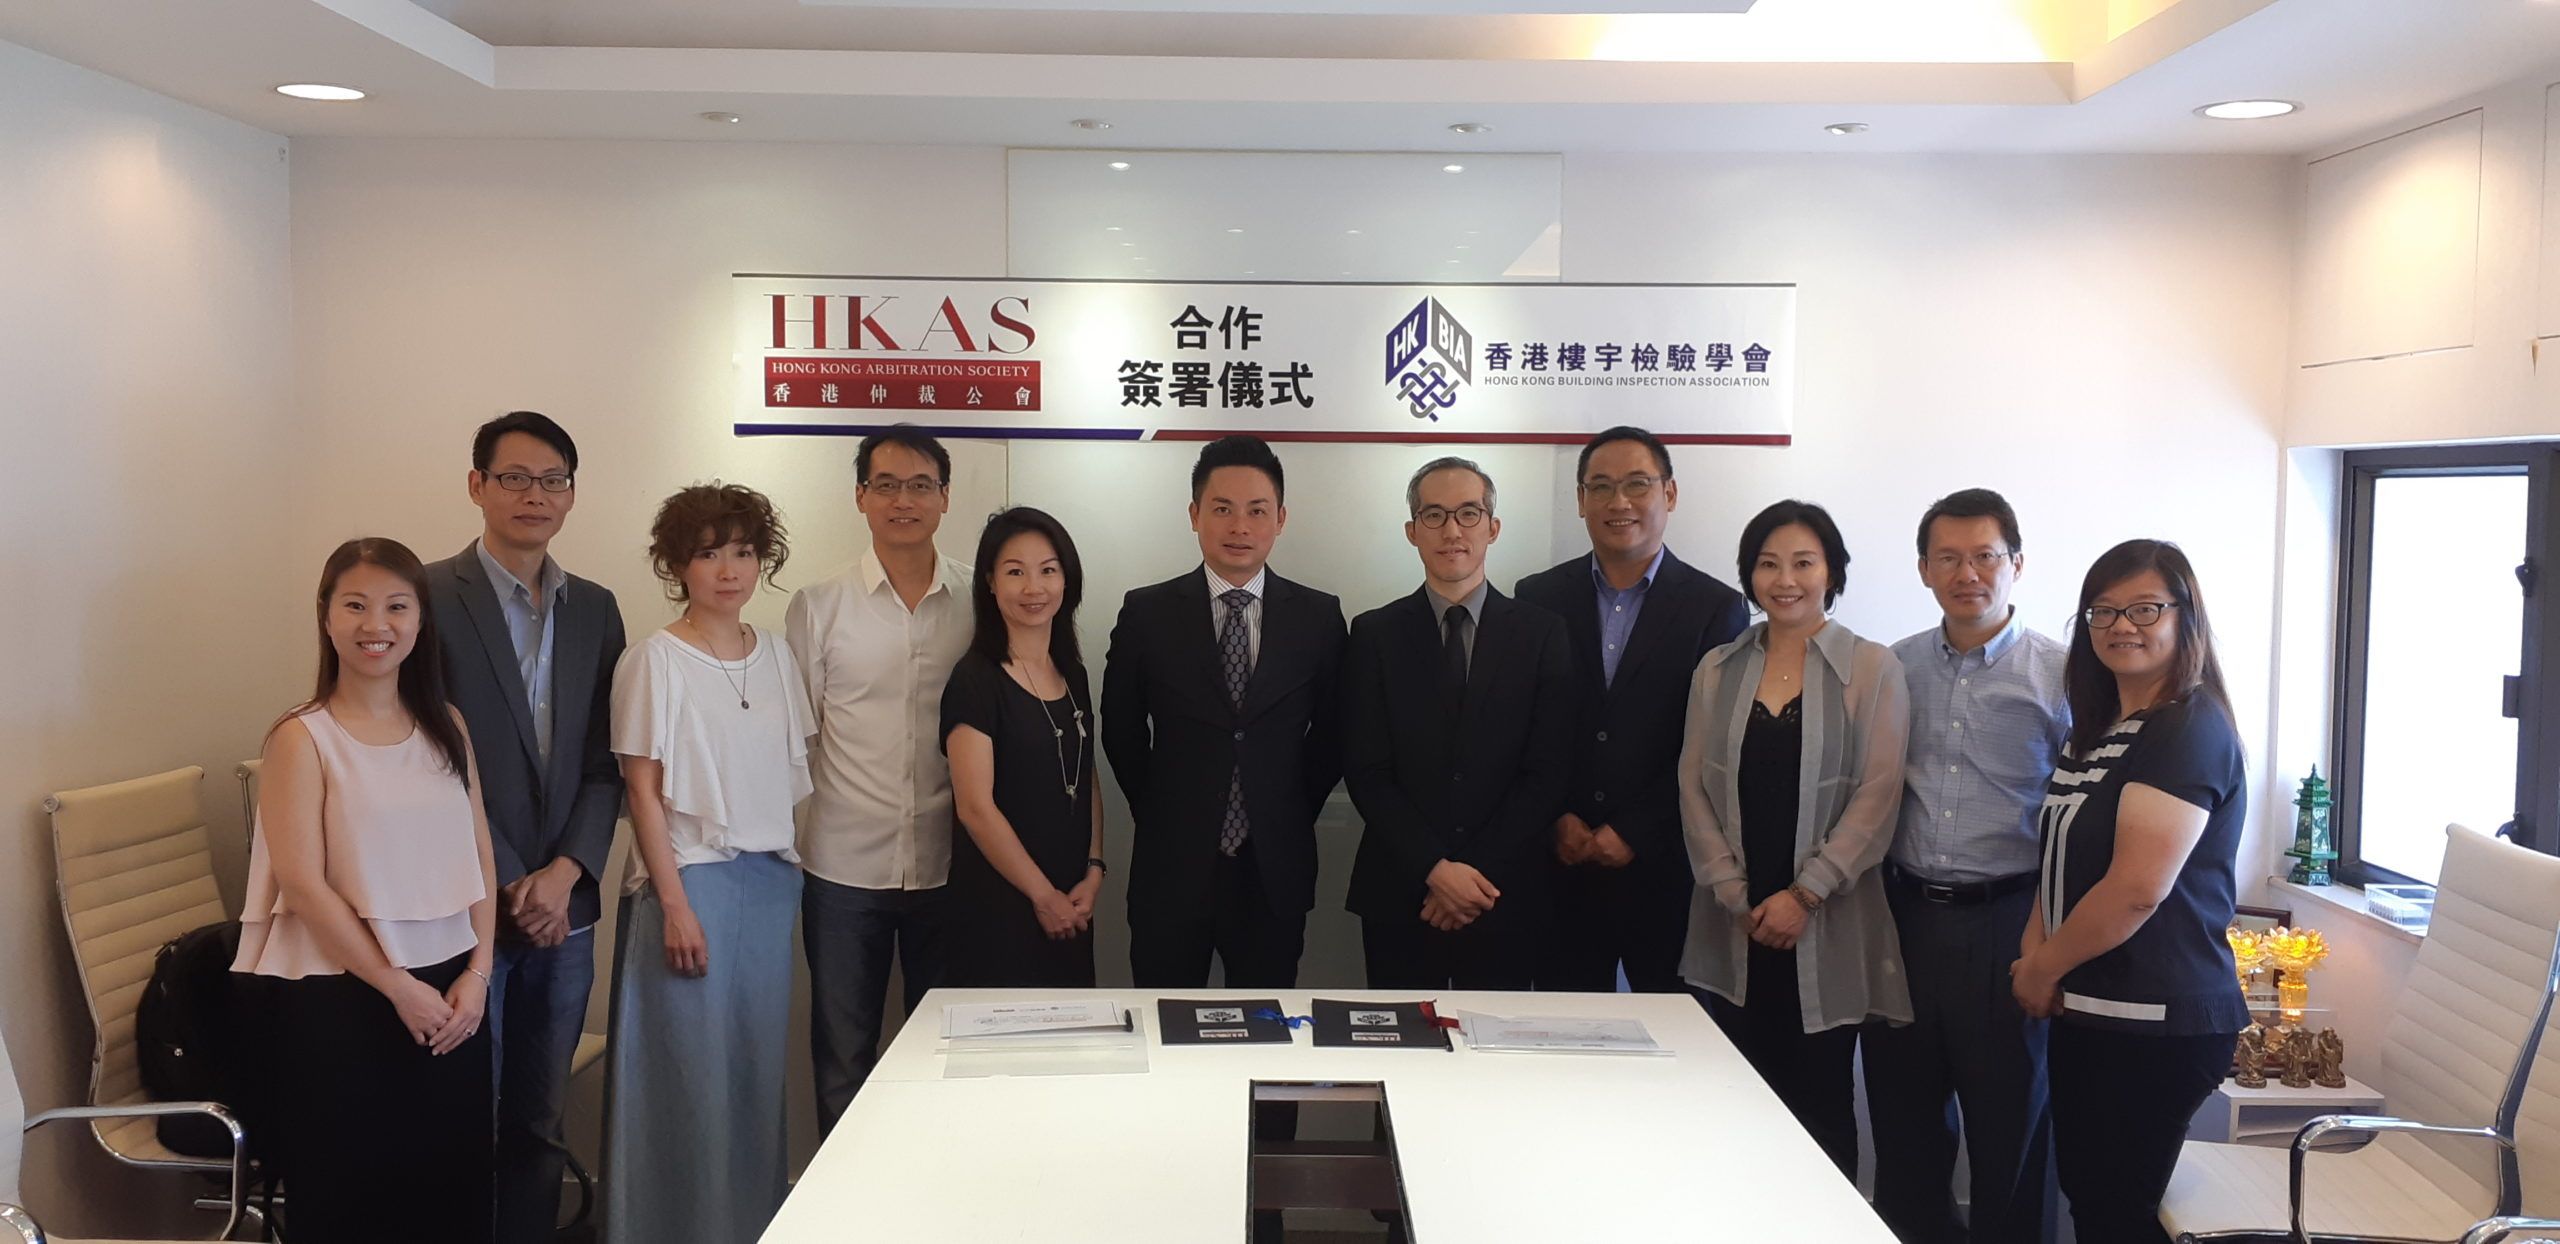 HKBIA「香港樓宇檢驗學會」與 HKAS「香港仲裁公會」合作簽署儀式